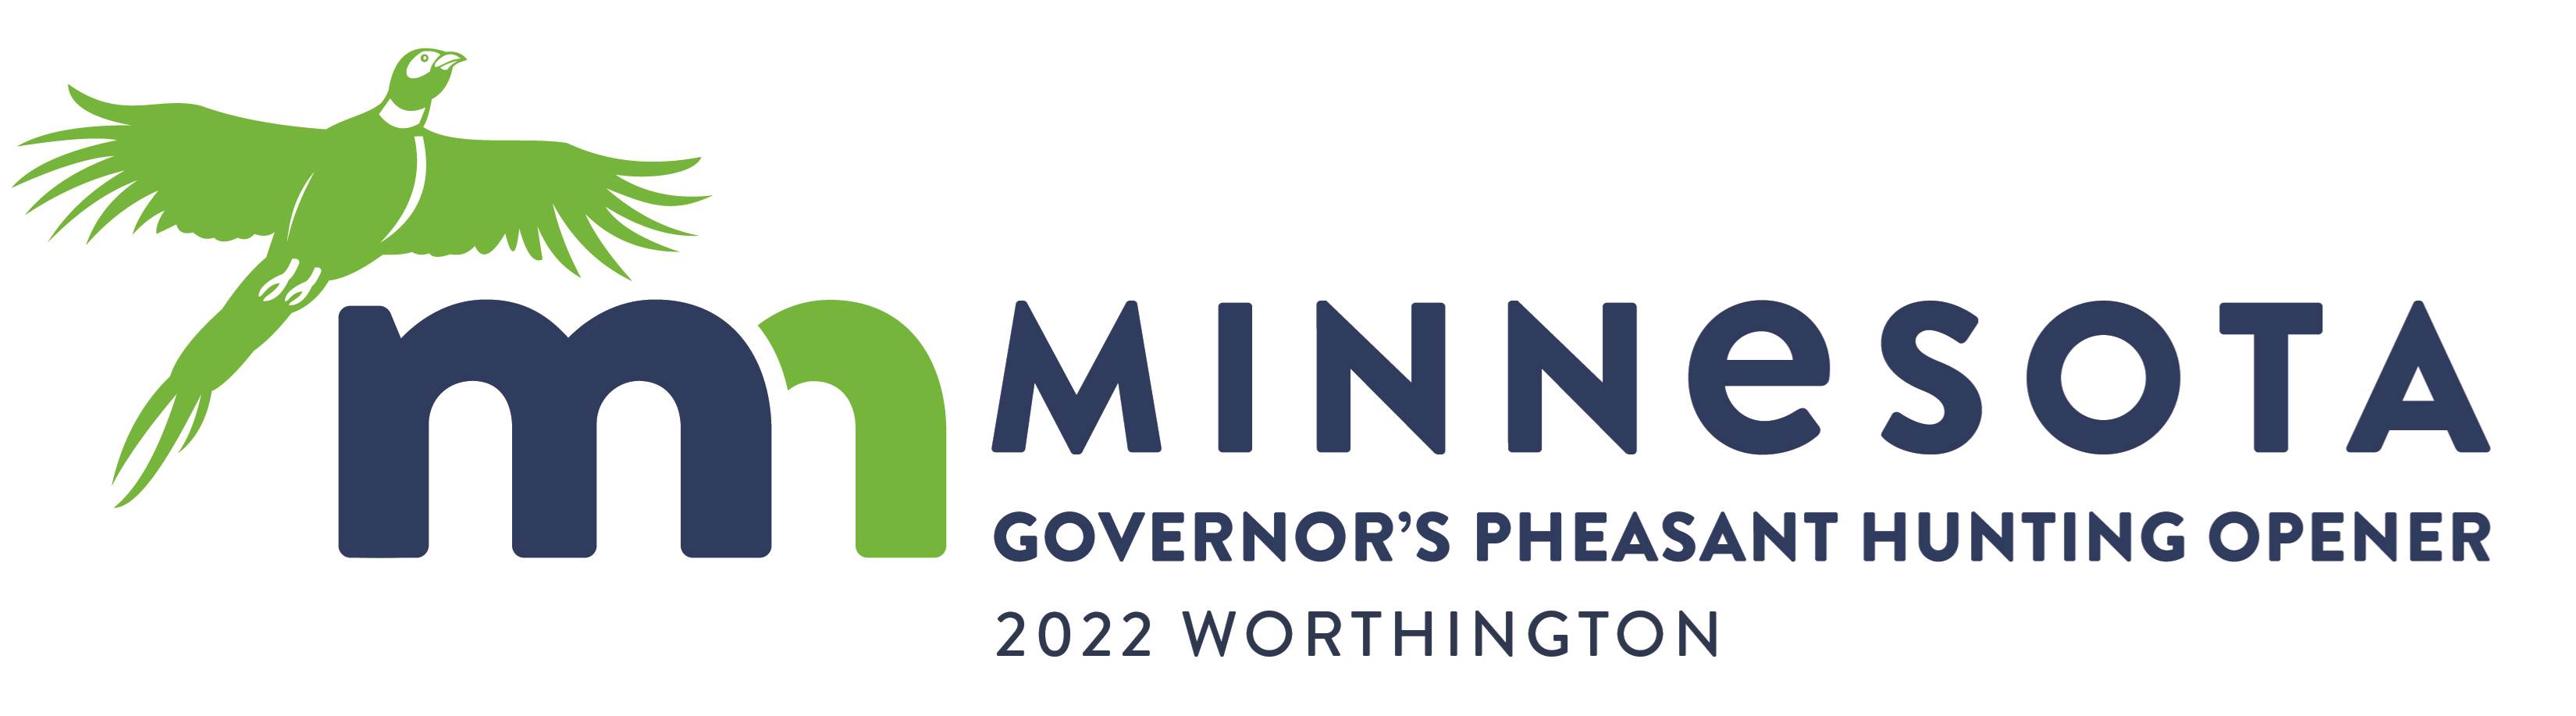 2022 Minnesota Governor's Pheasant Hunting Opener